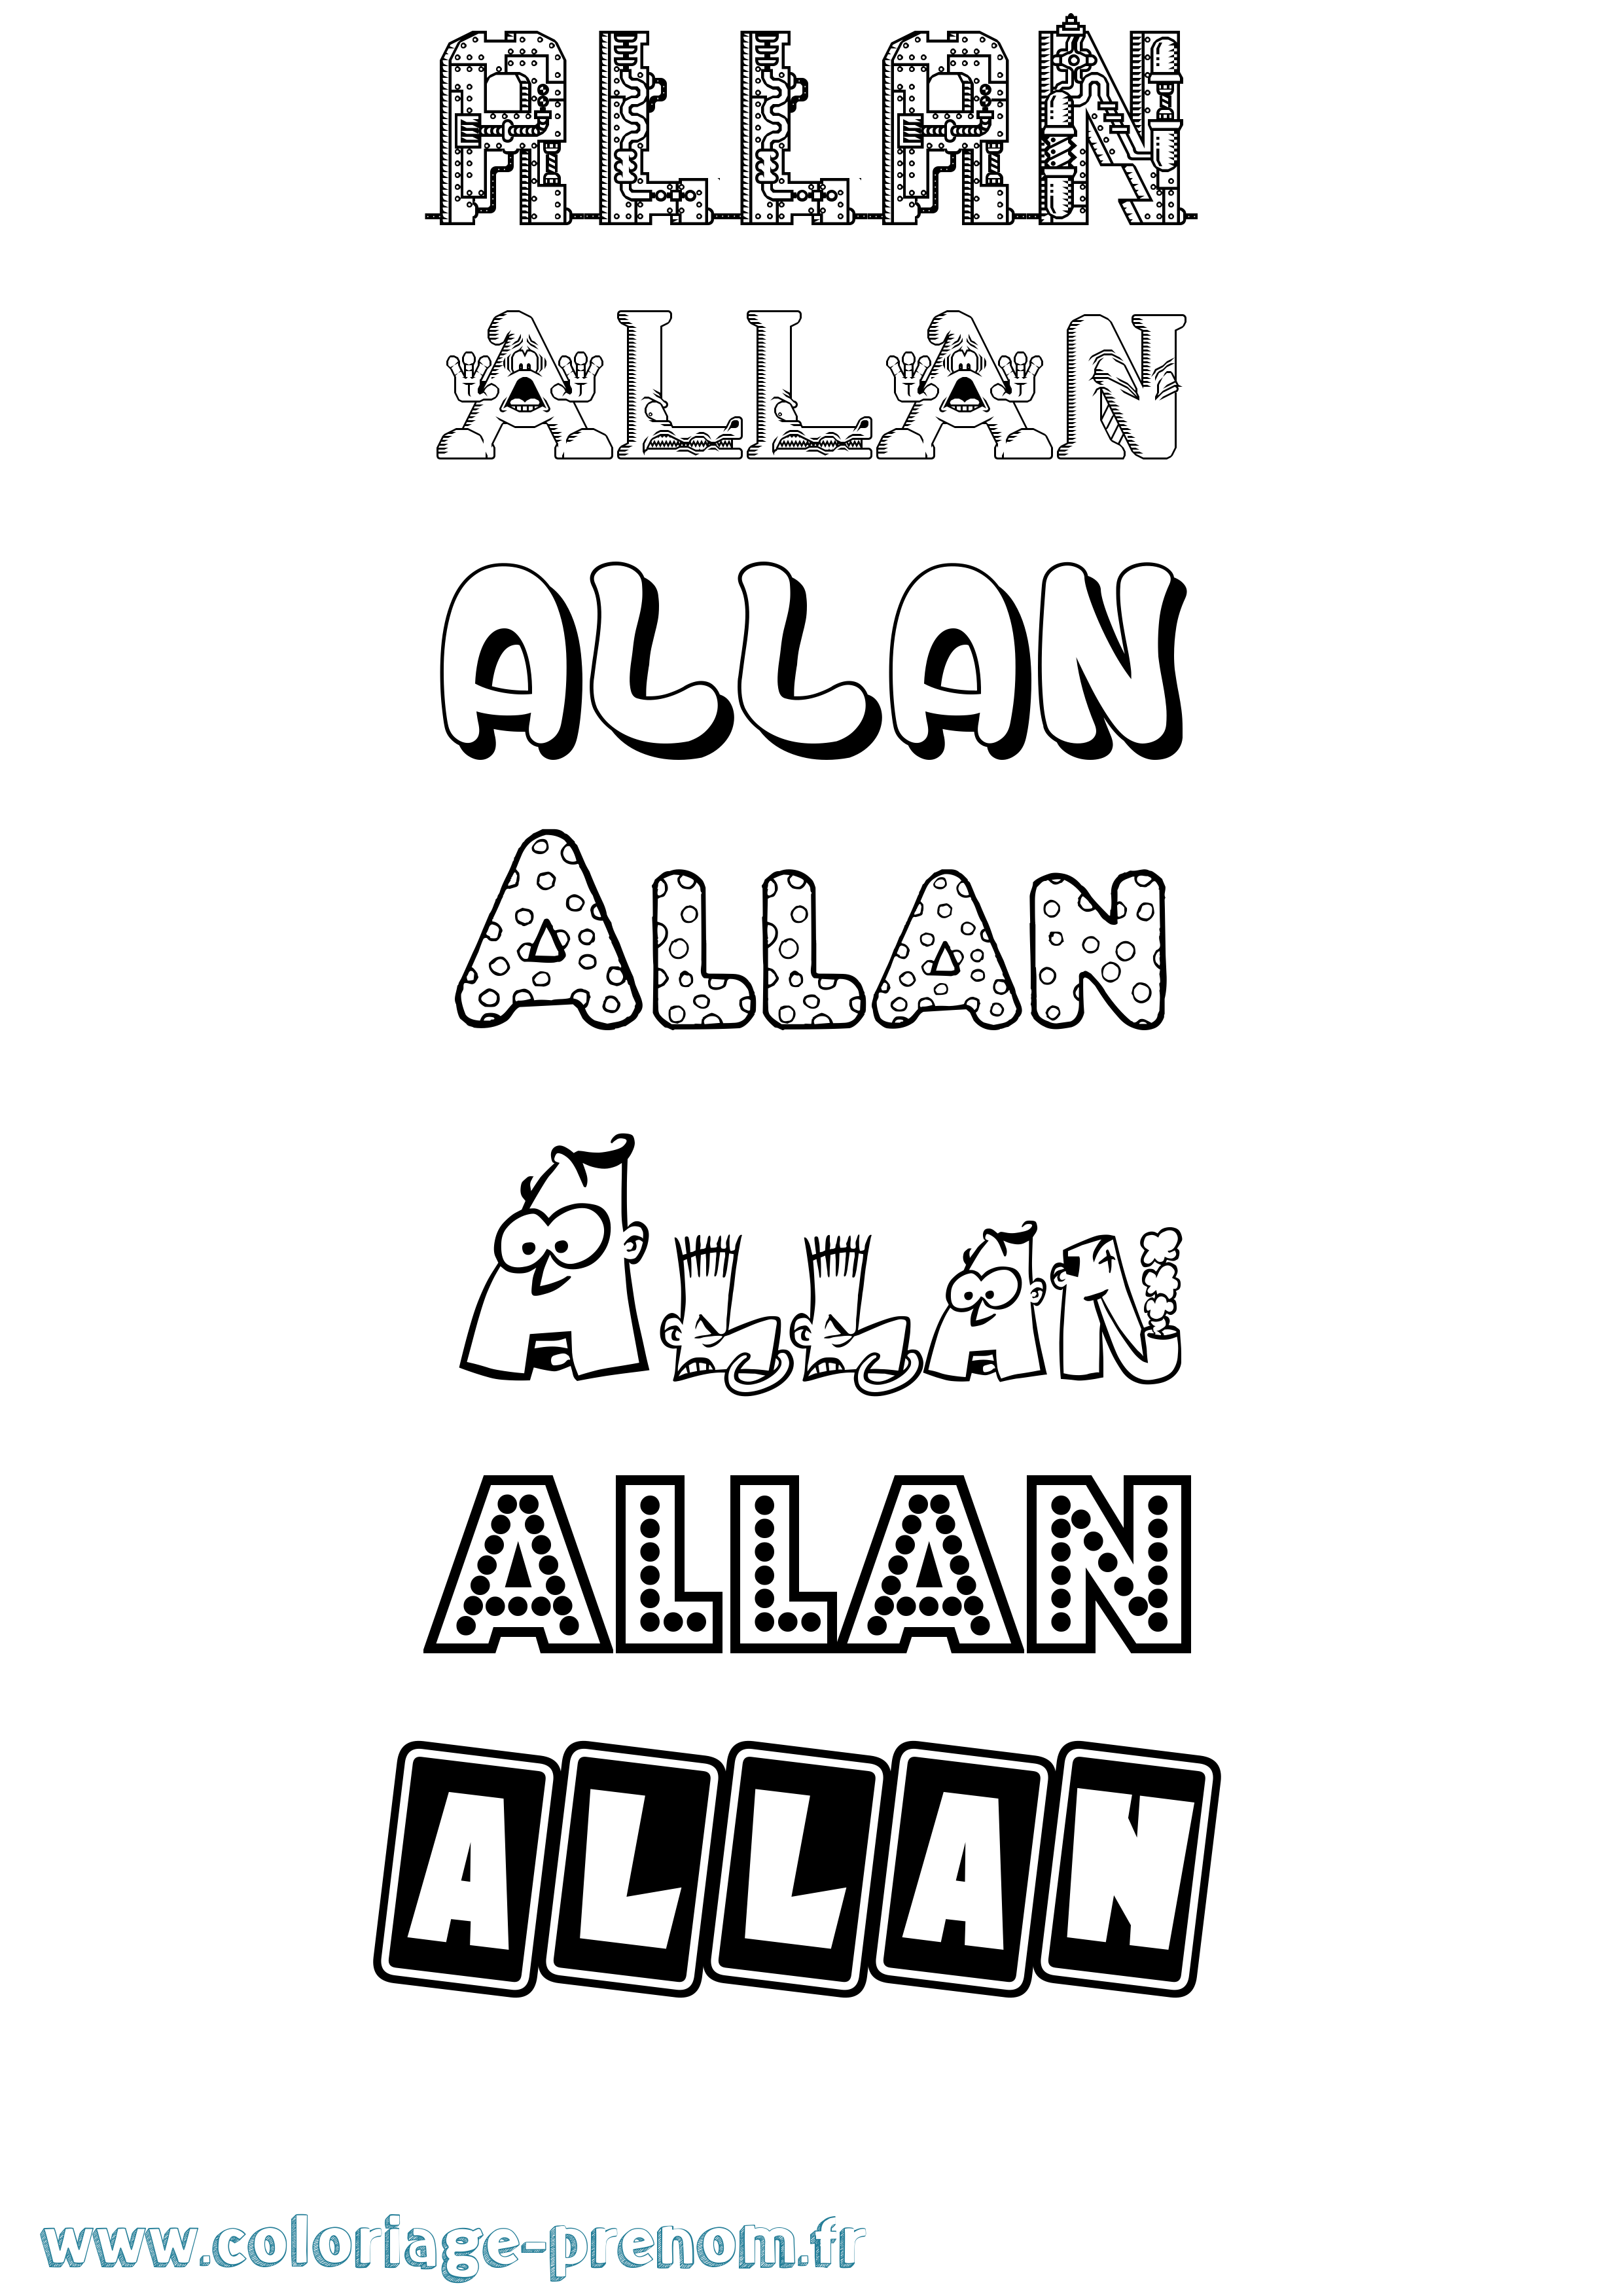 Coloriage prénom Allan Fun